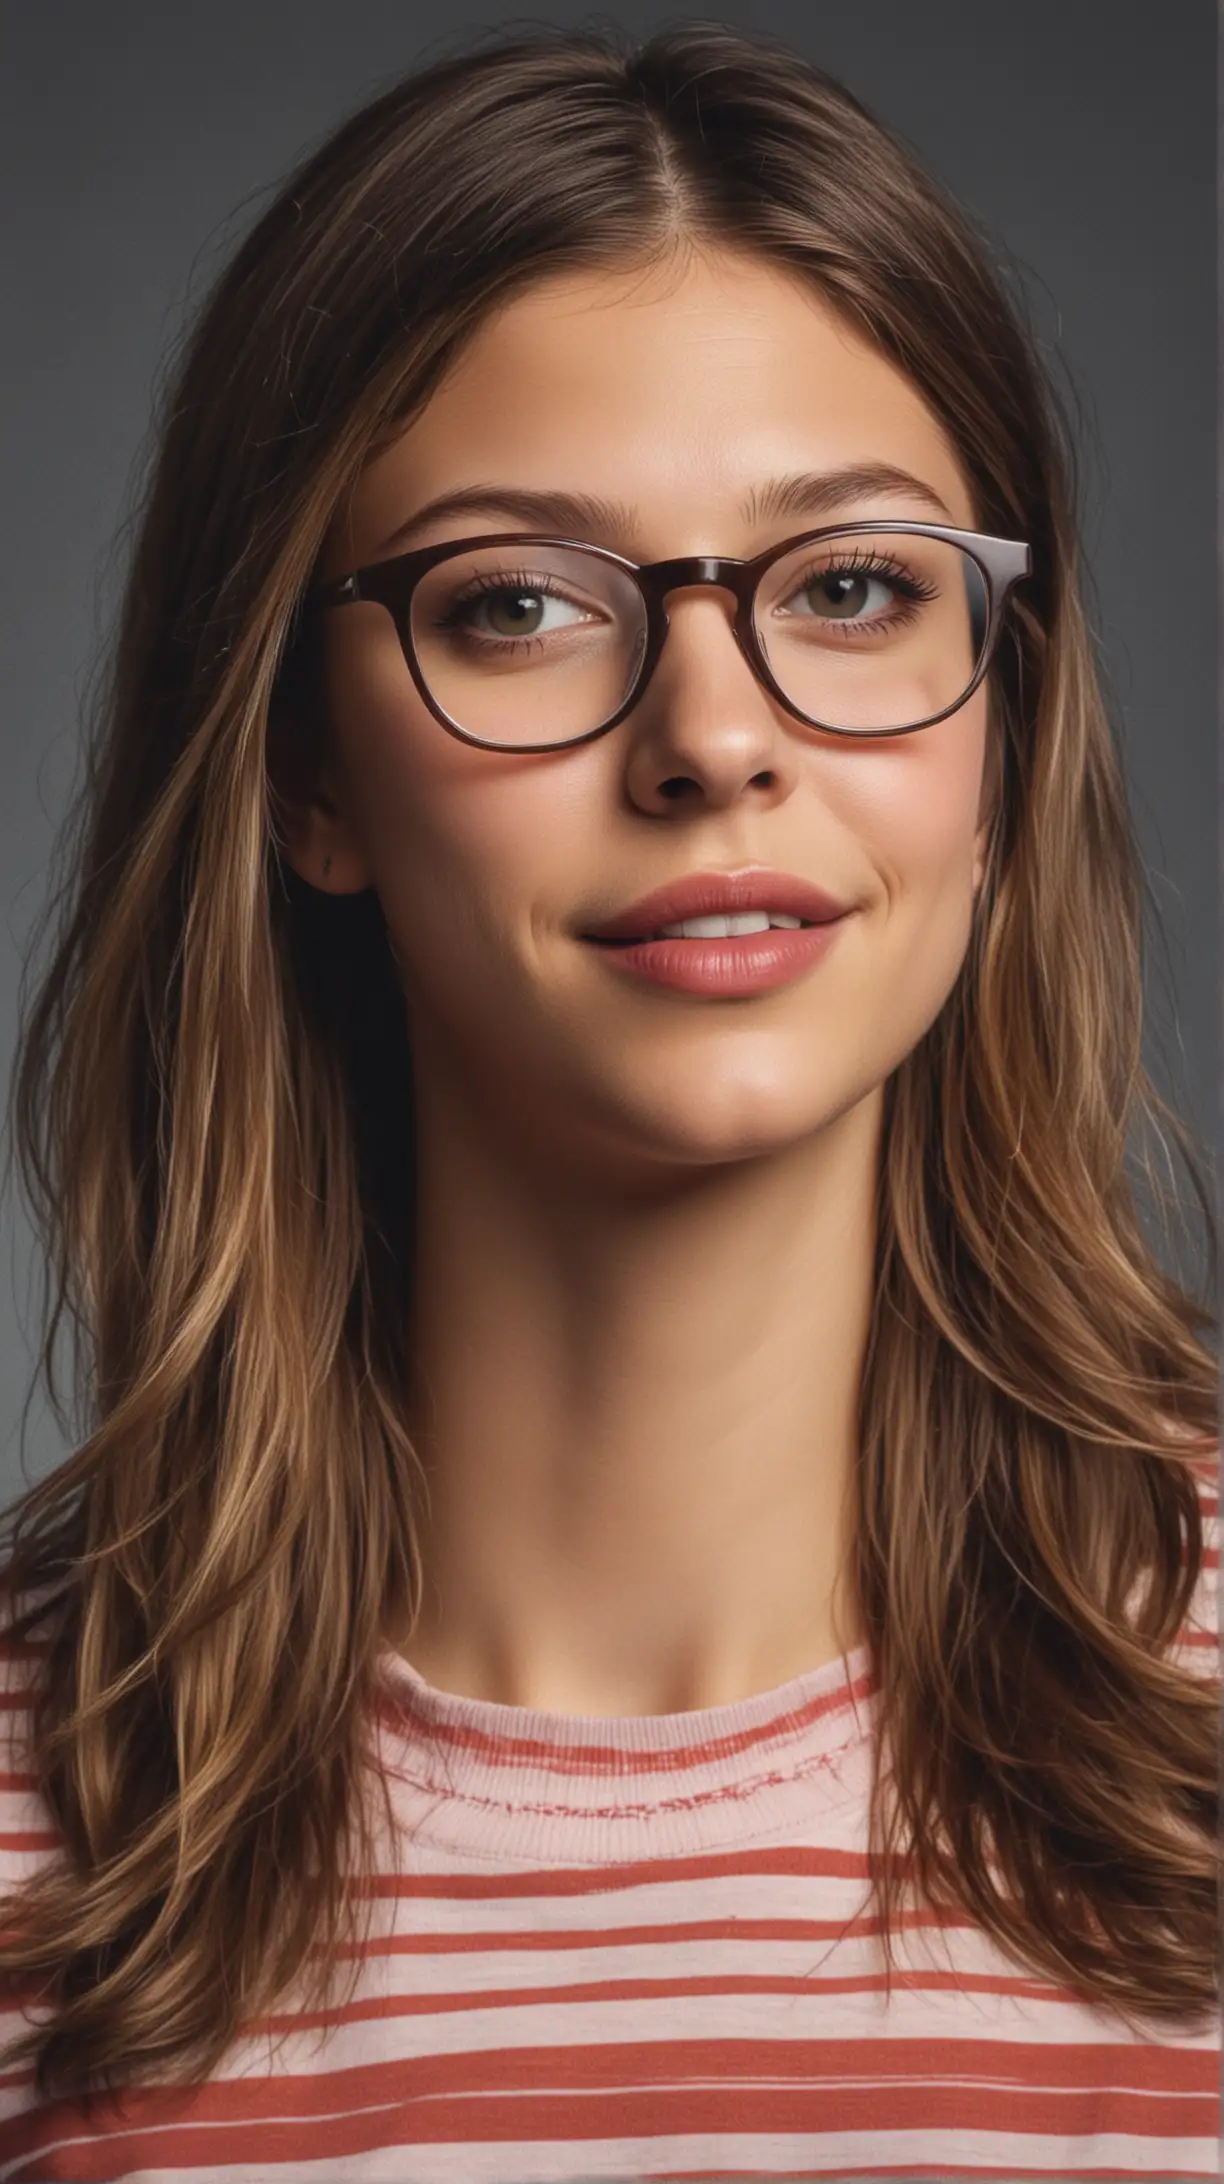 18-year-old Melissa Benoist wearing glasses in 1980’s Stranger Things